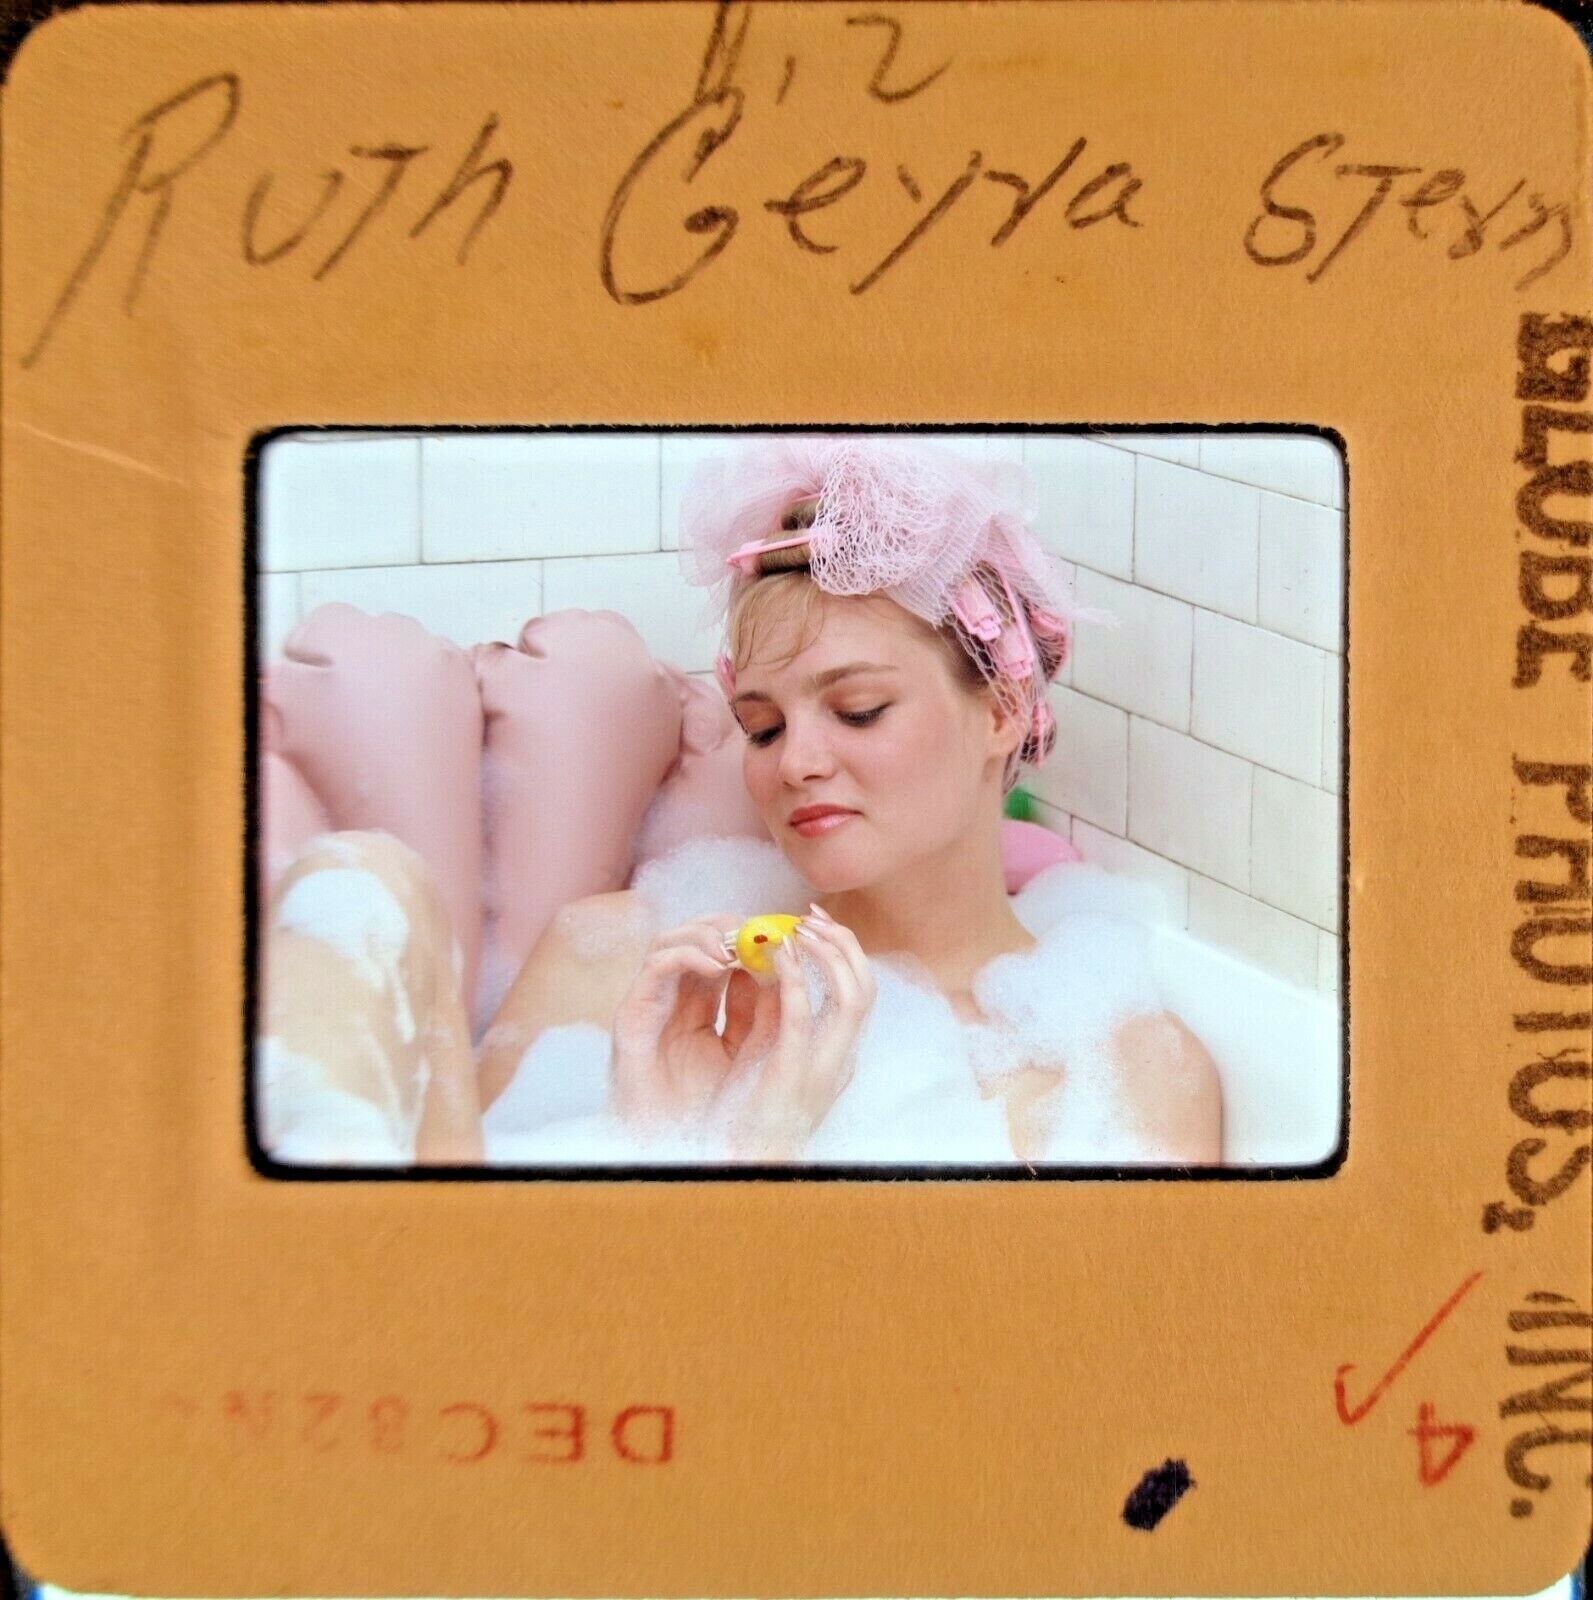 LV1-220 1982 RUTH GEYVA STERN SEXY BLONDE BATH BABE ORIGINAL 35MM COLOR SLIDE